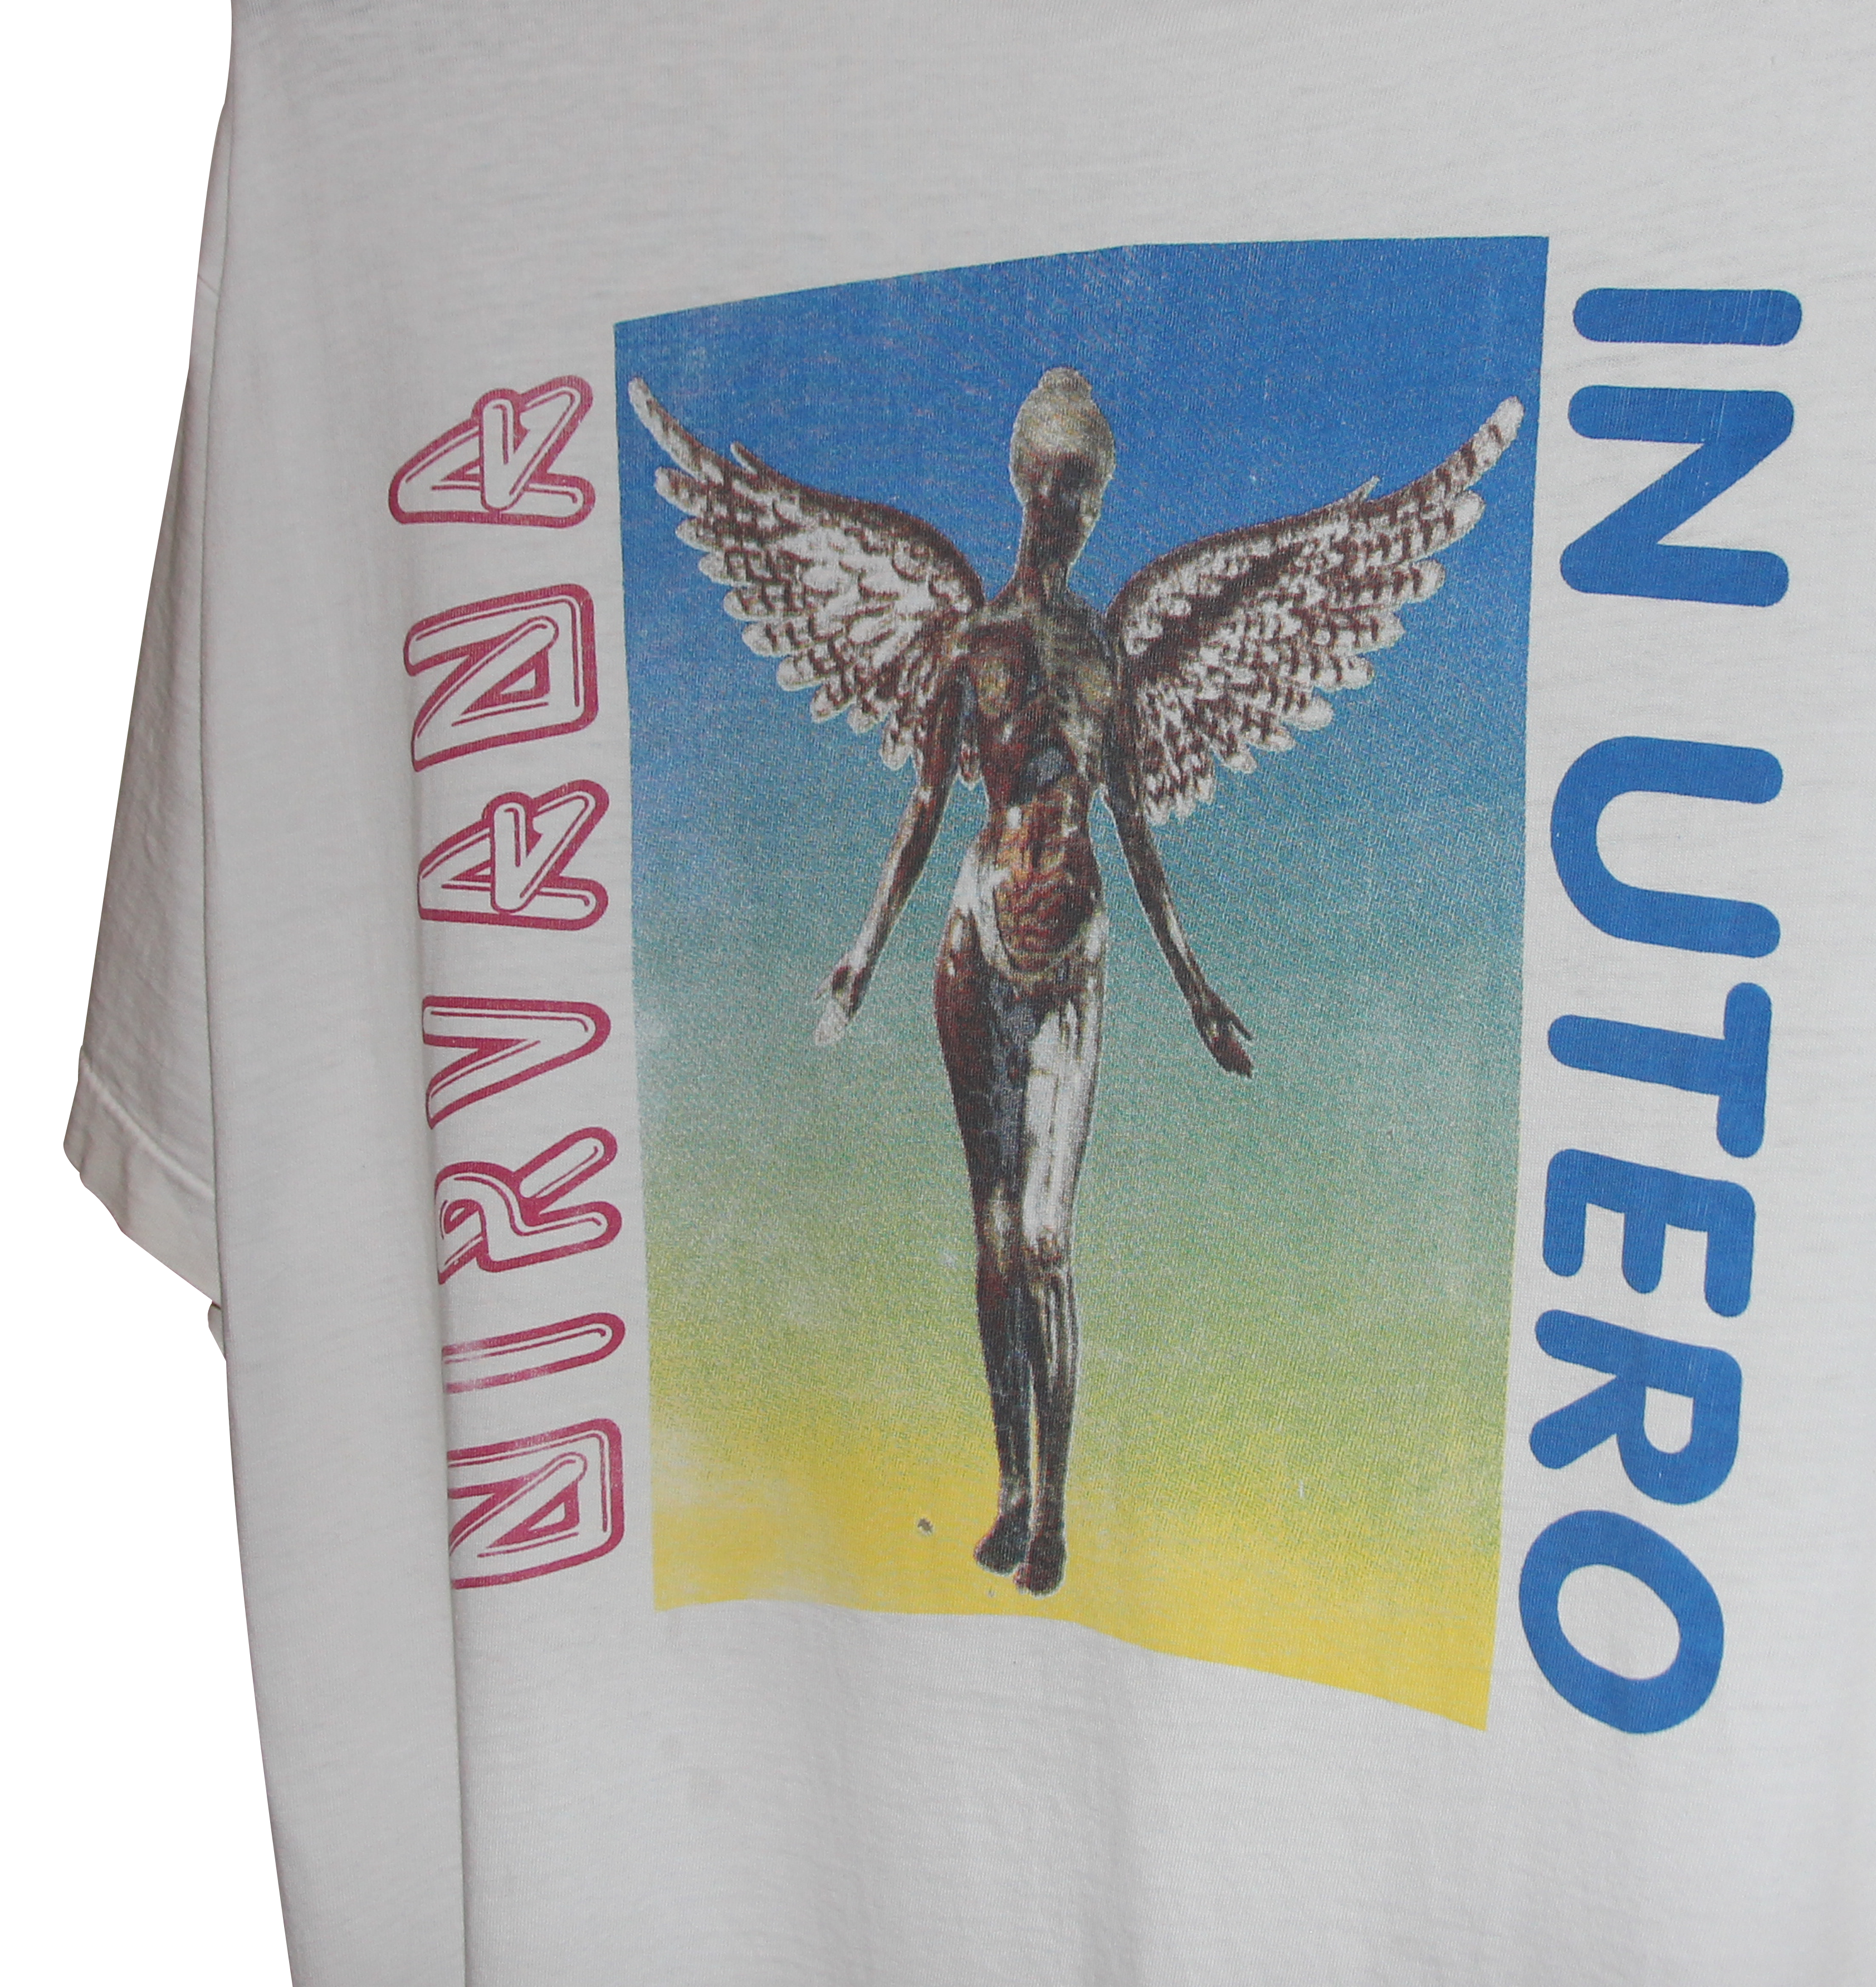 Nirvana 1993/94 In Utero World Tour Shirt X-LARGE